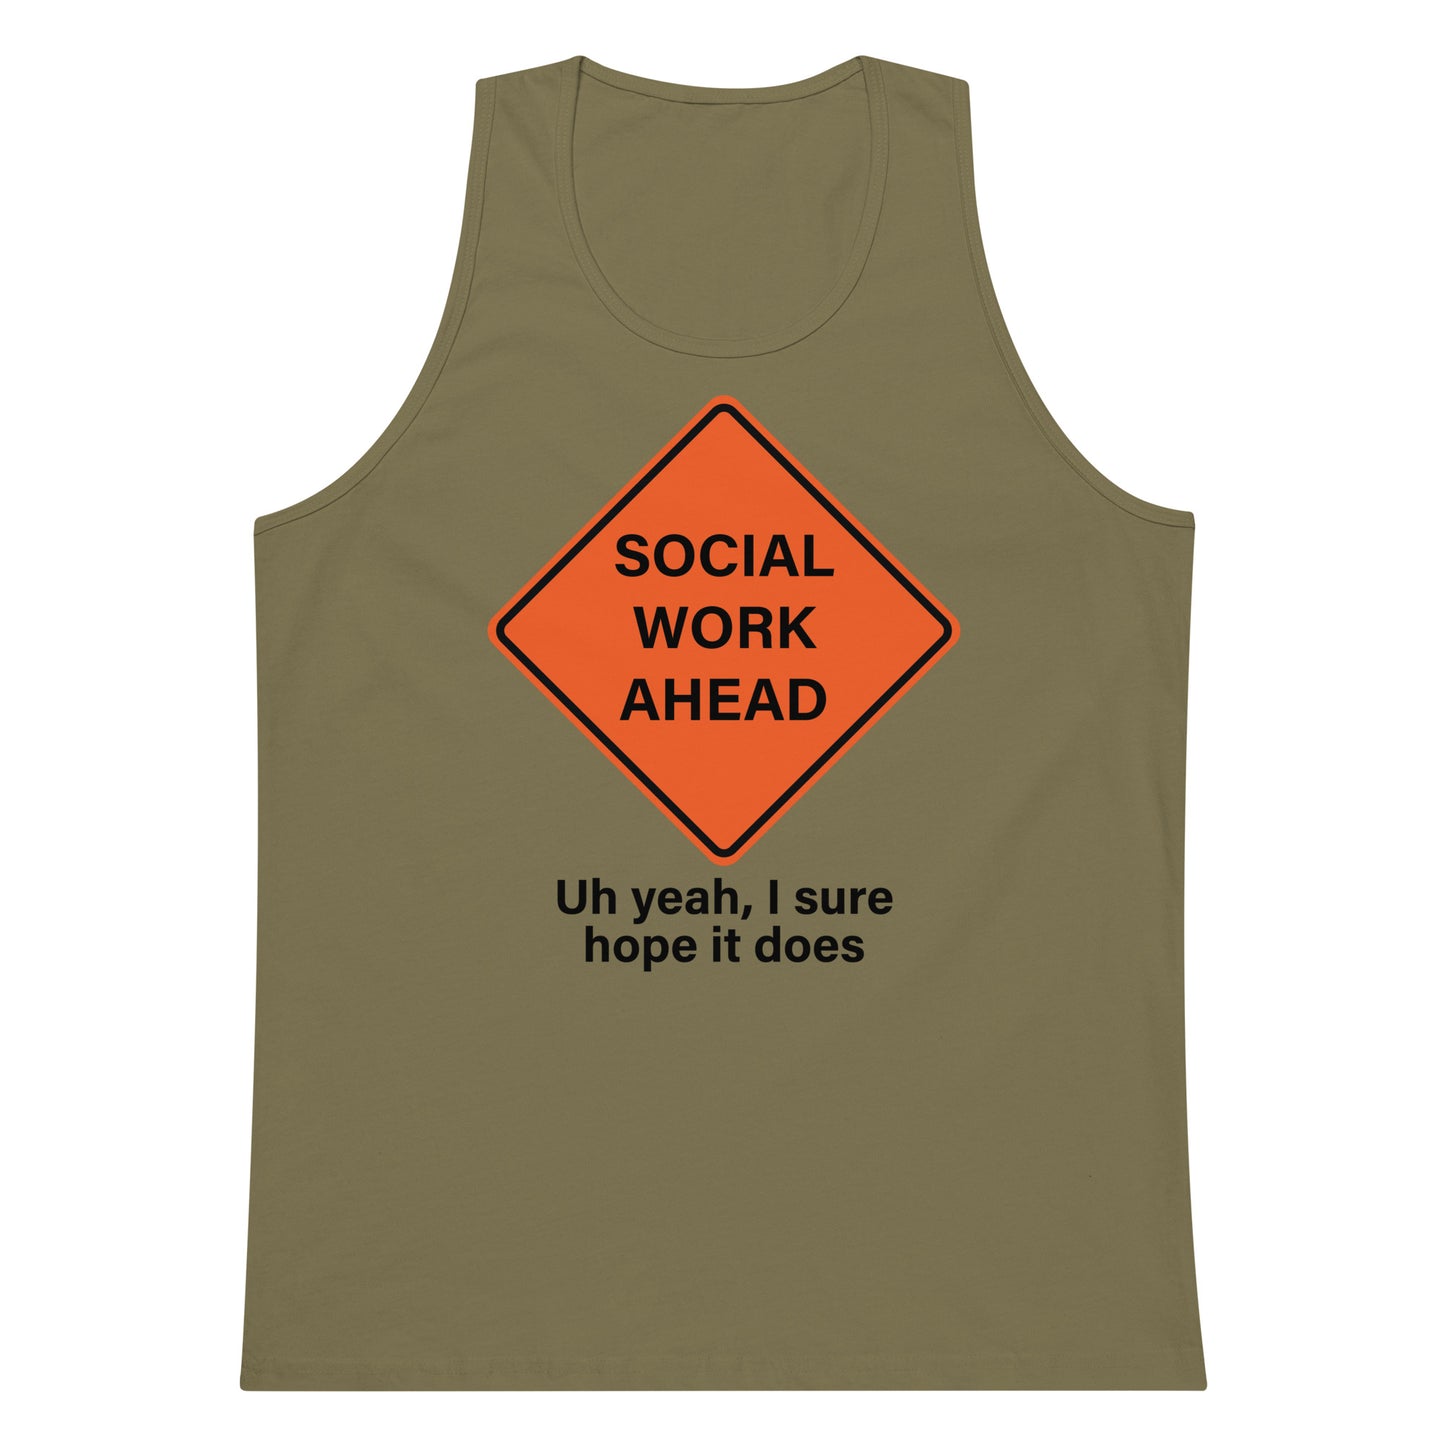 Social Work Ahead tank top